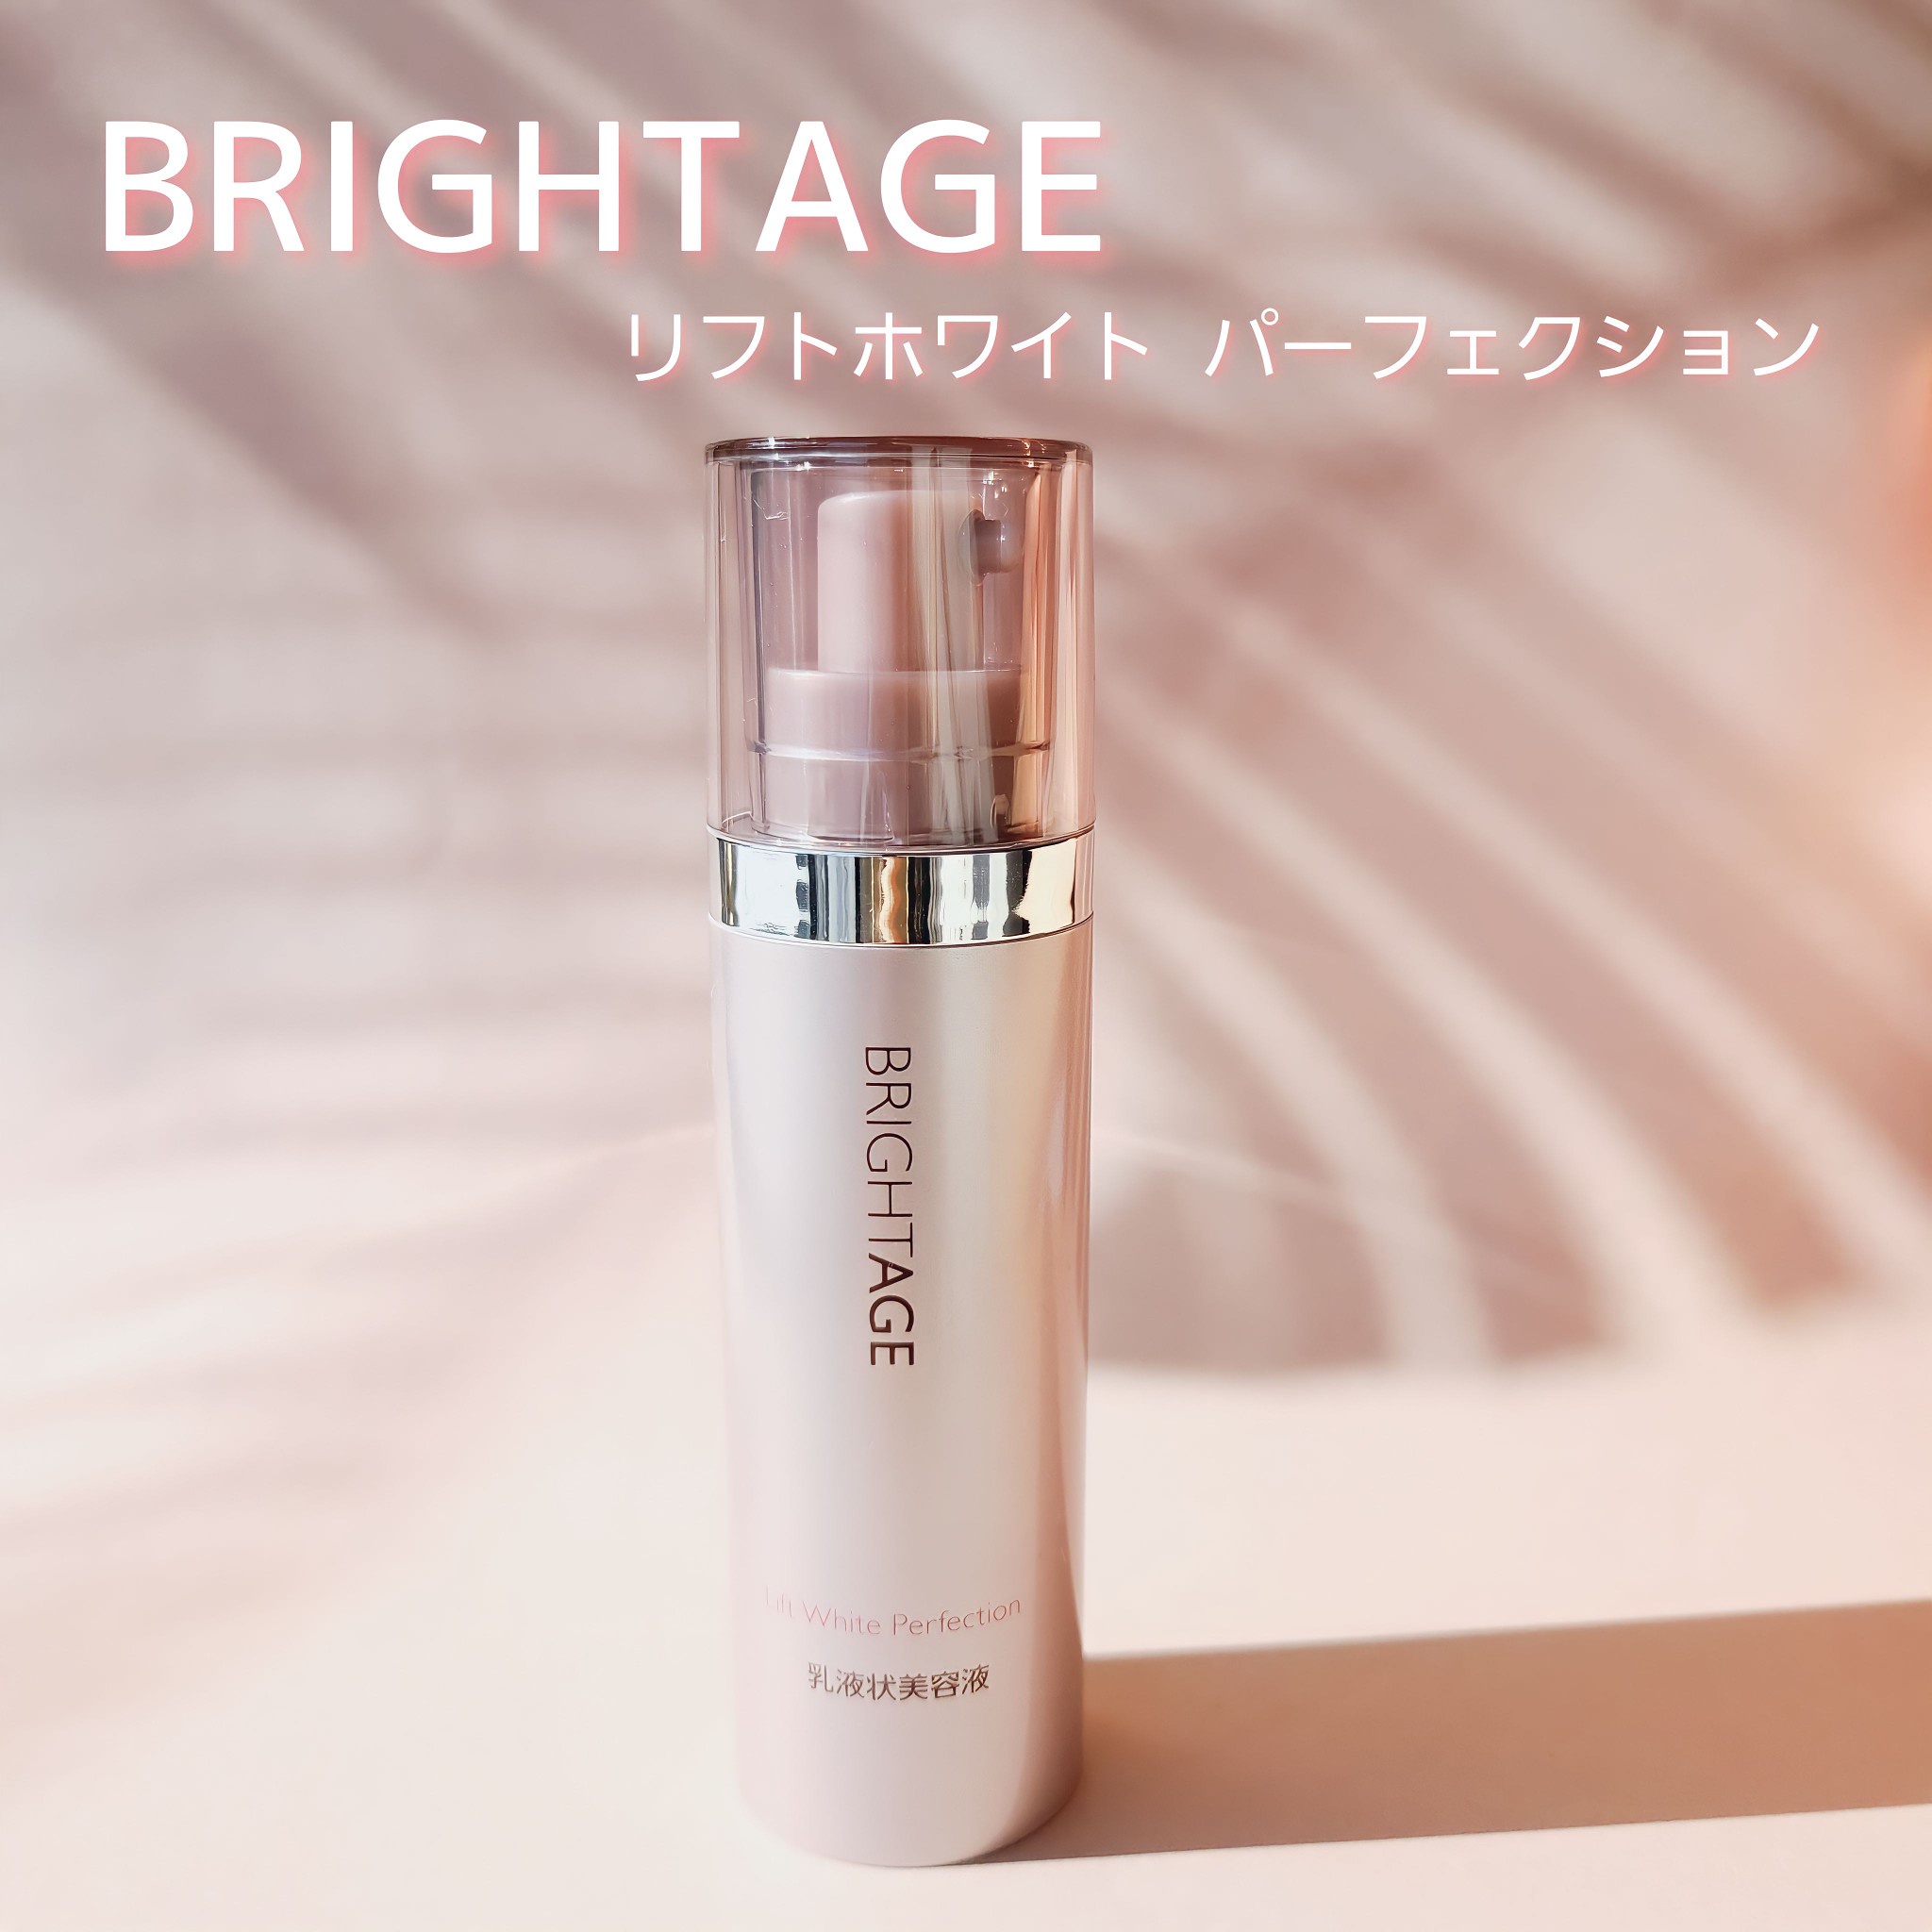 BRIGHTAGE リフトホワイト パーフェクション 乳液状美容液 - 基礎化粧品